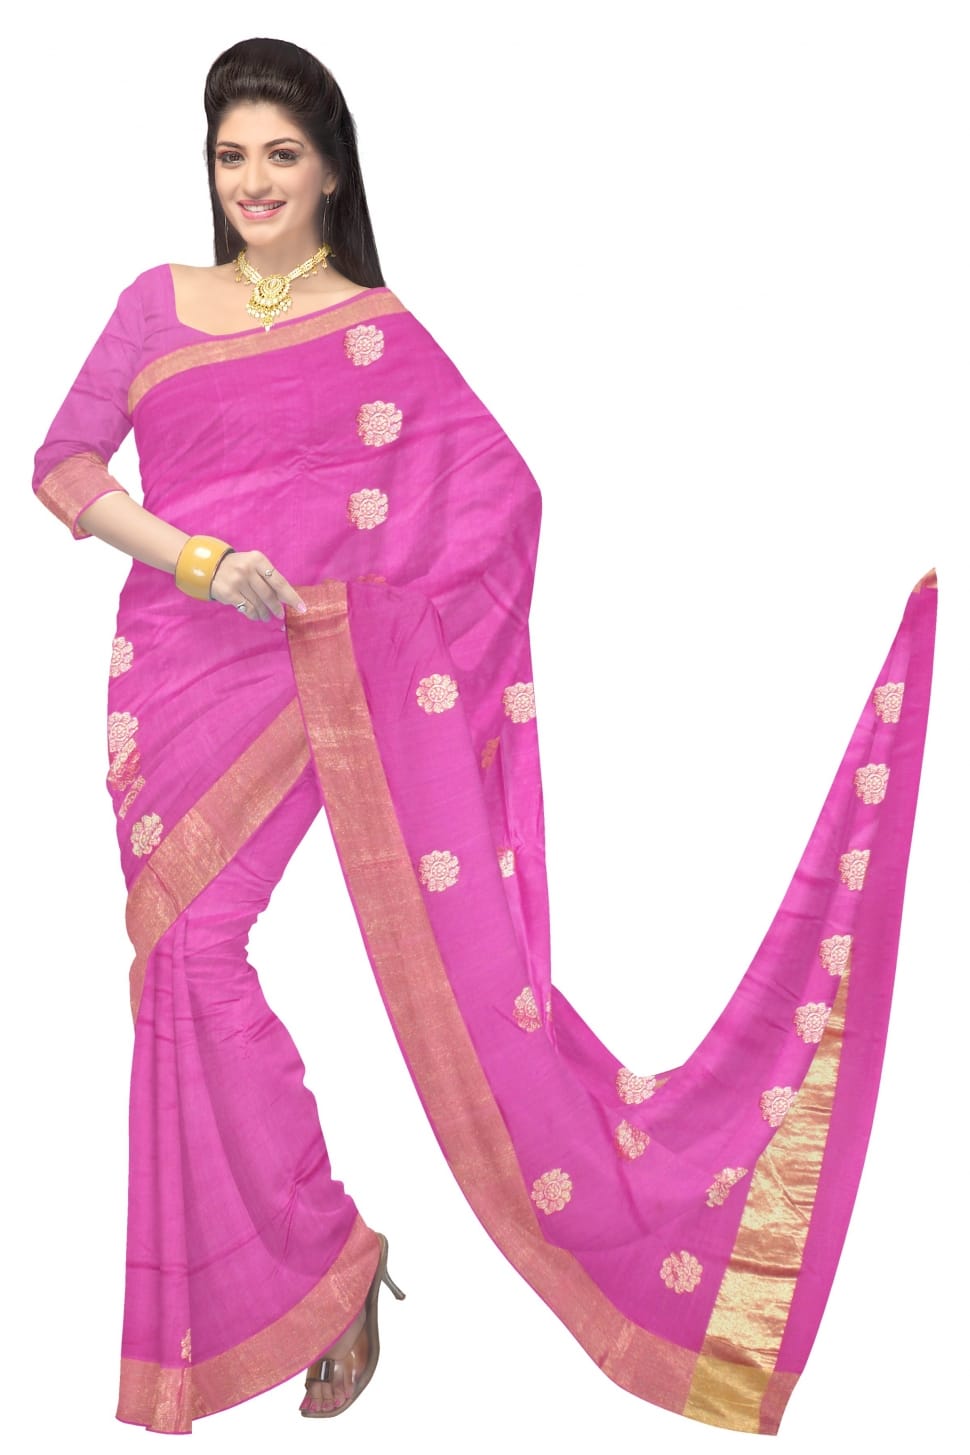 women's pink sari preview